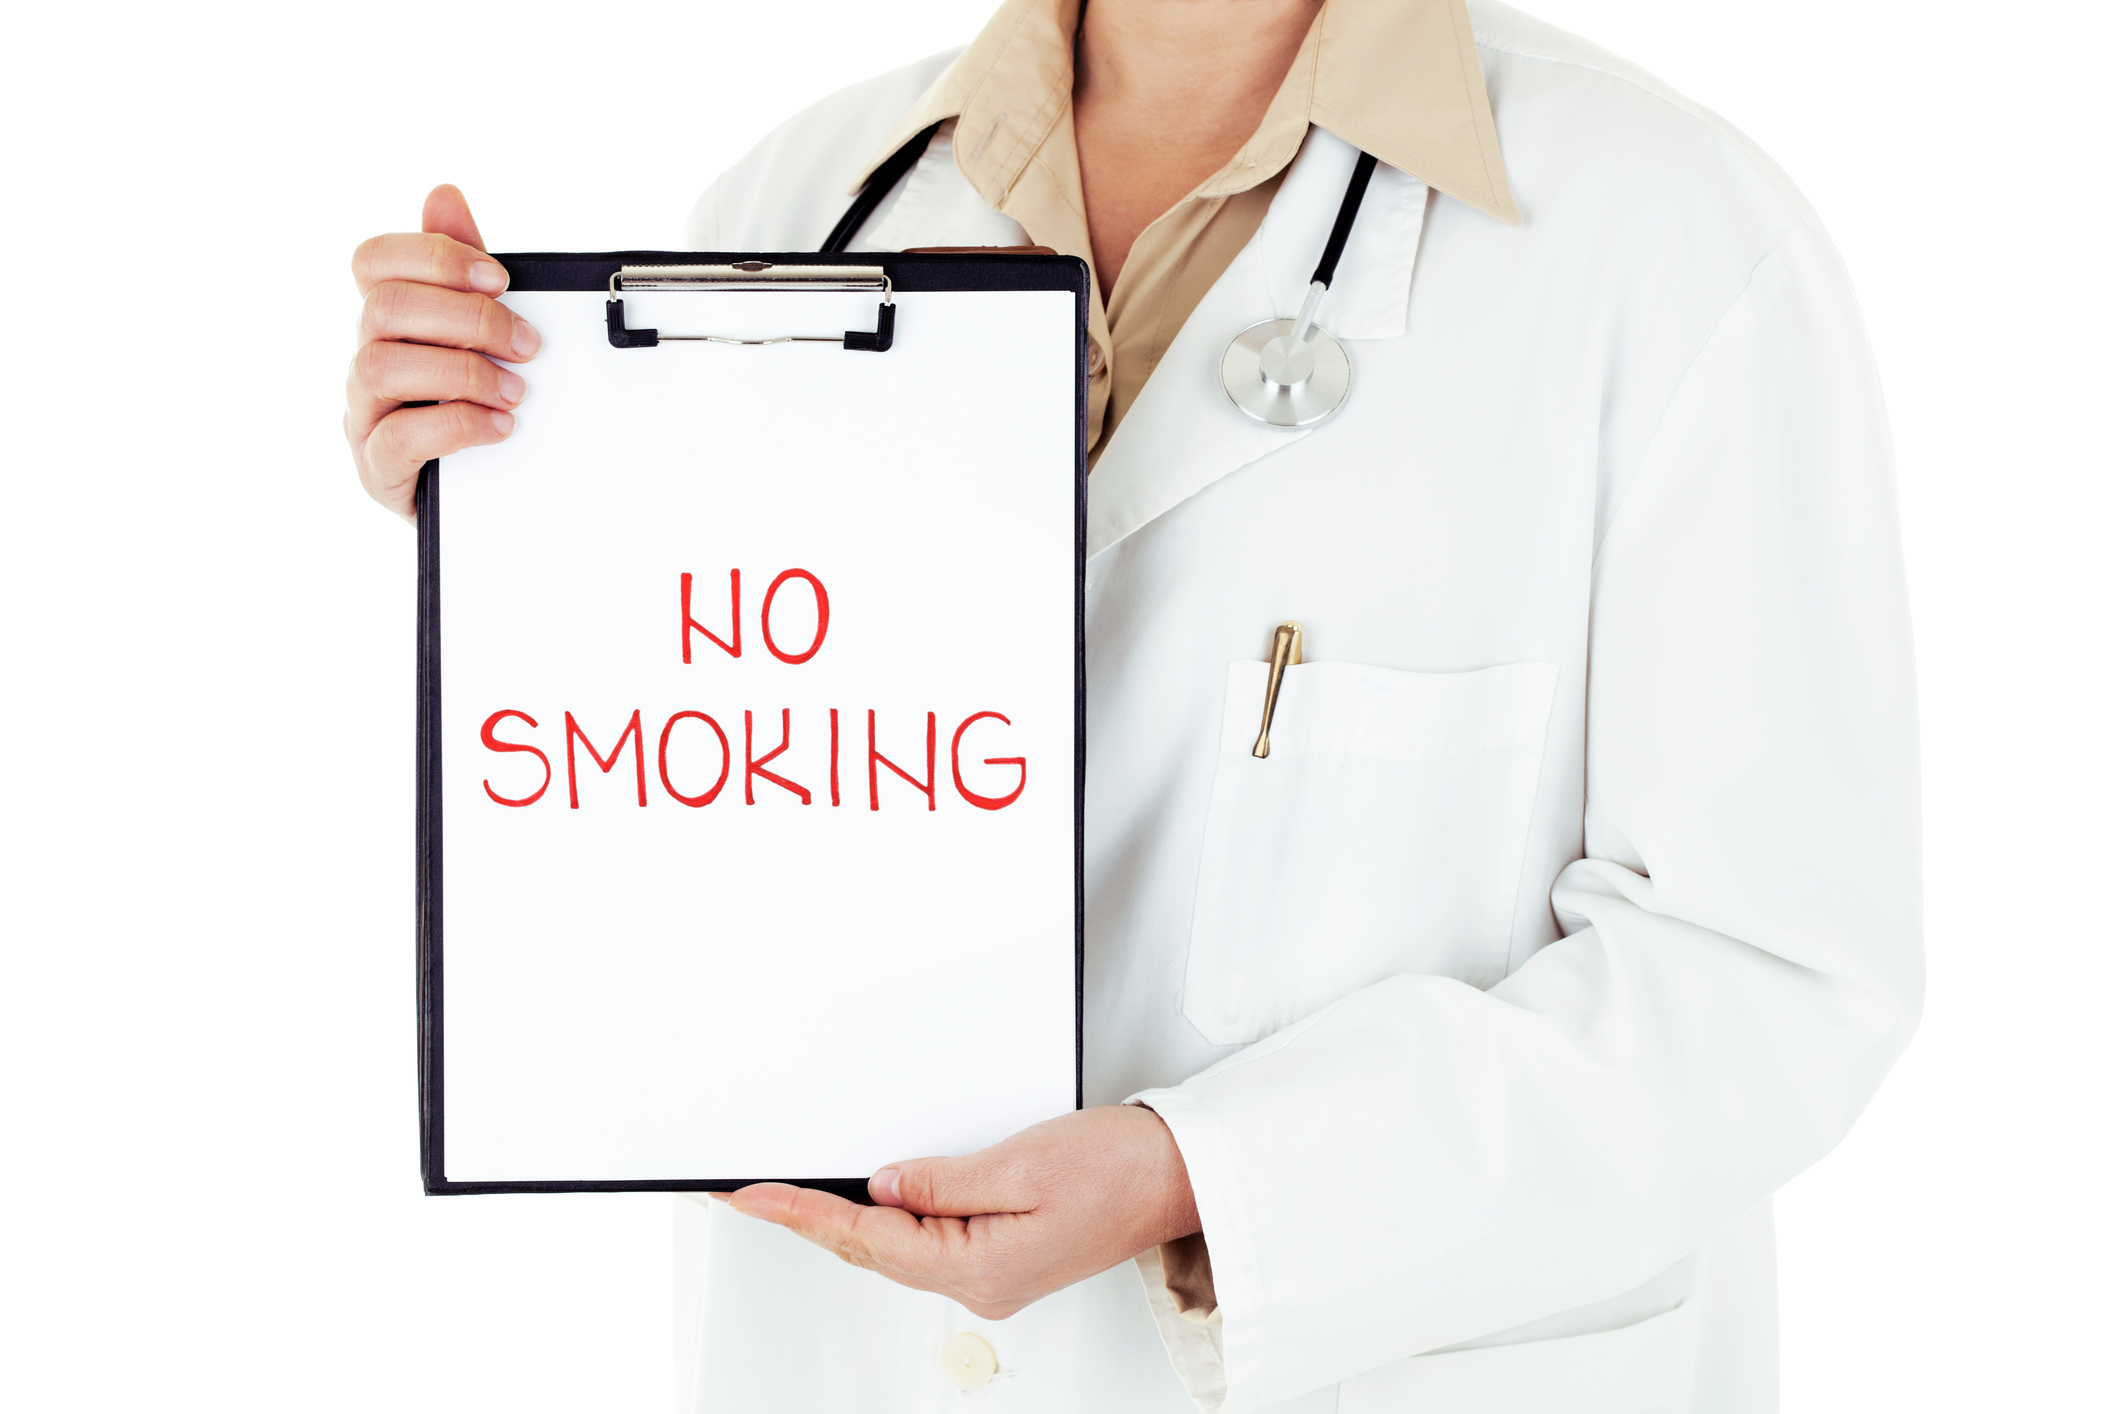 CVS: Tobacco Sale Ban Is Already Having A Major Impact